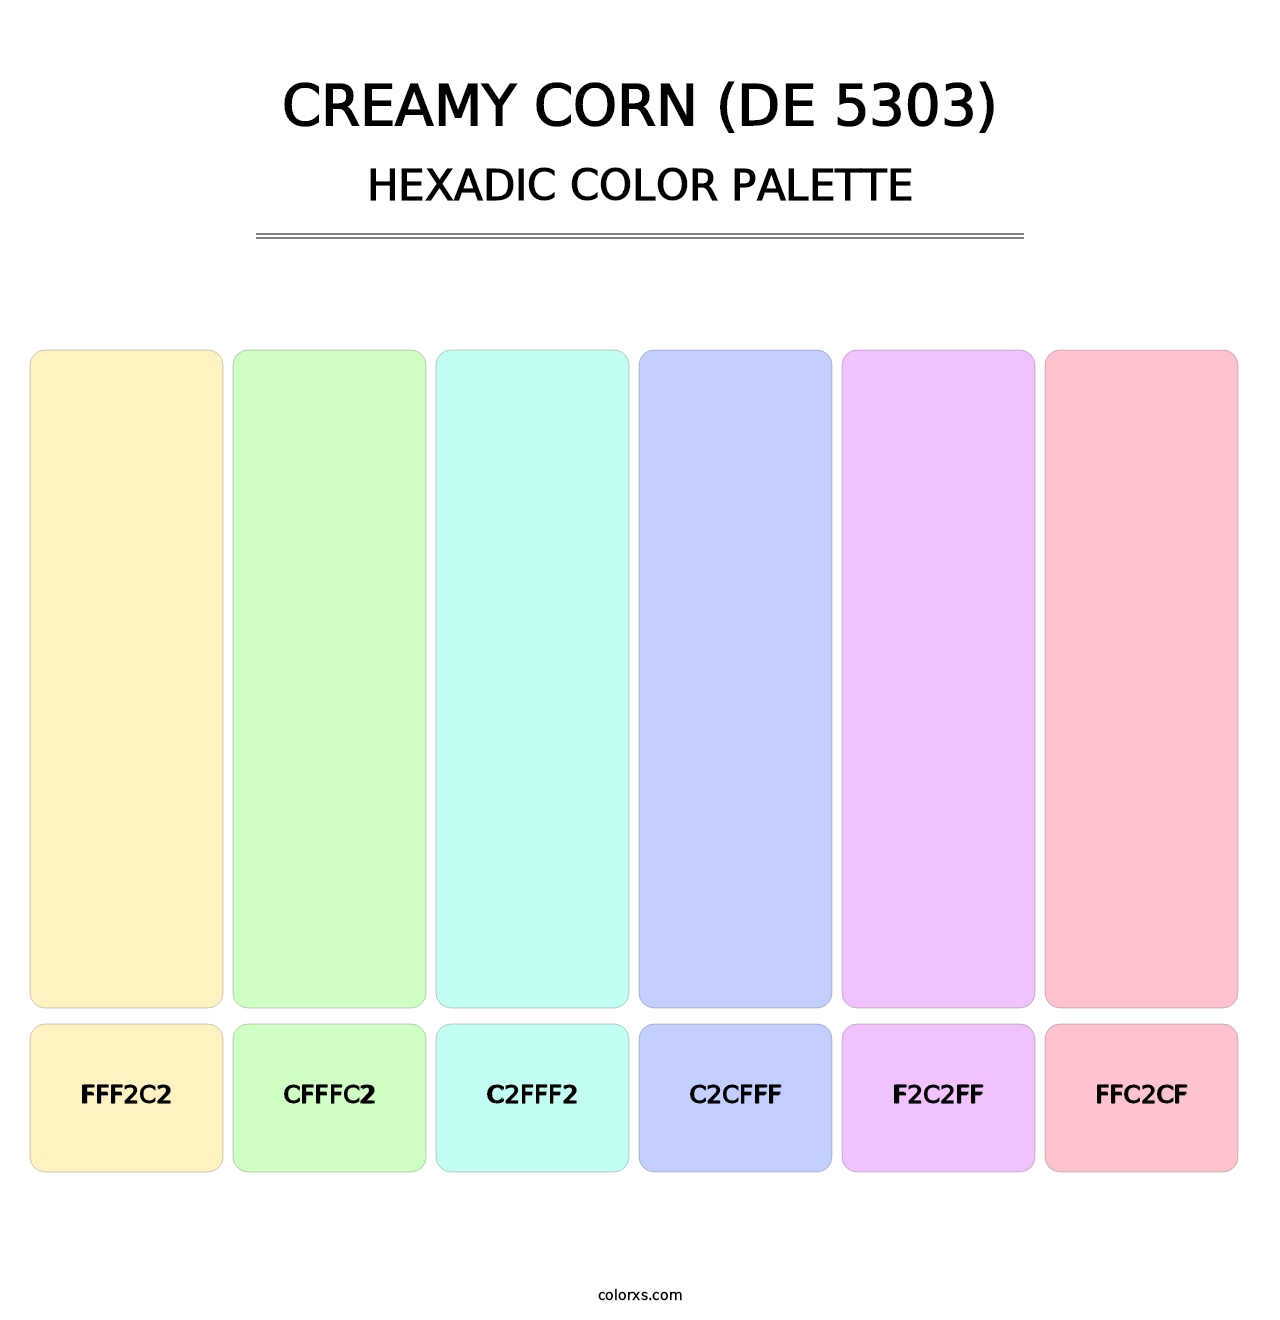 Creamy Corn (DE 5303) - Hexadic Color Palette